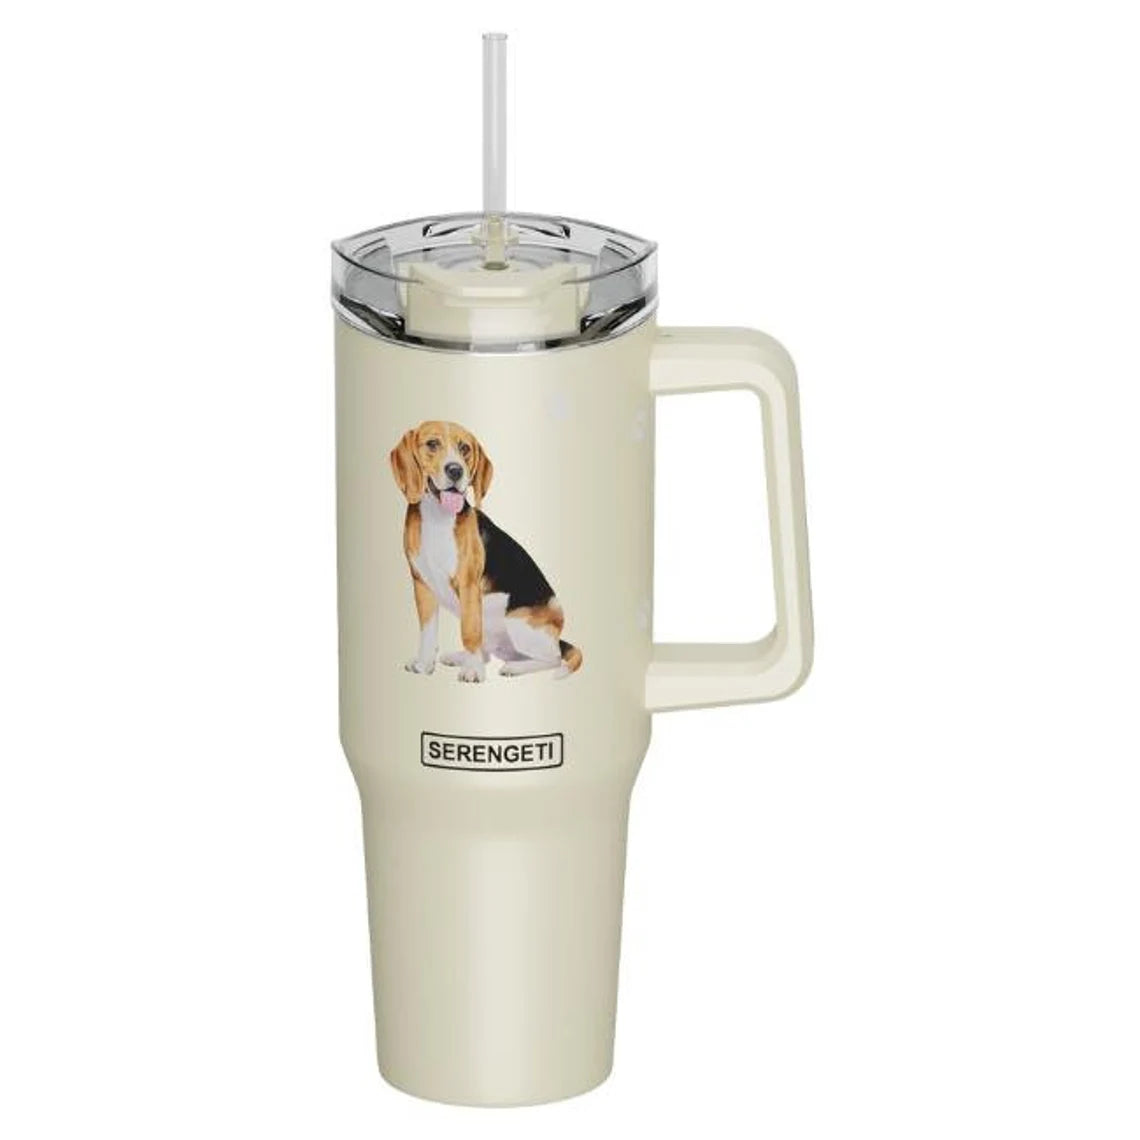 SERENGETI Stainless Steel Mug 40oz - Beagle